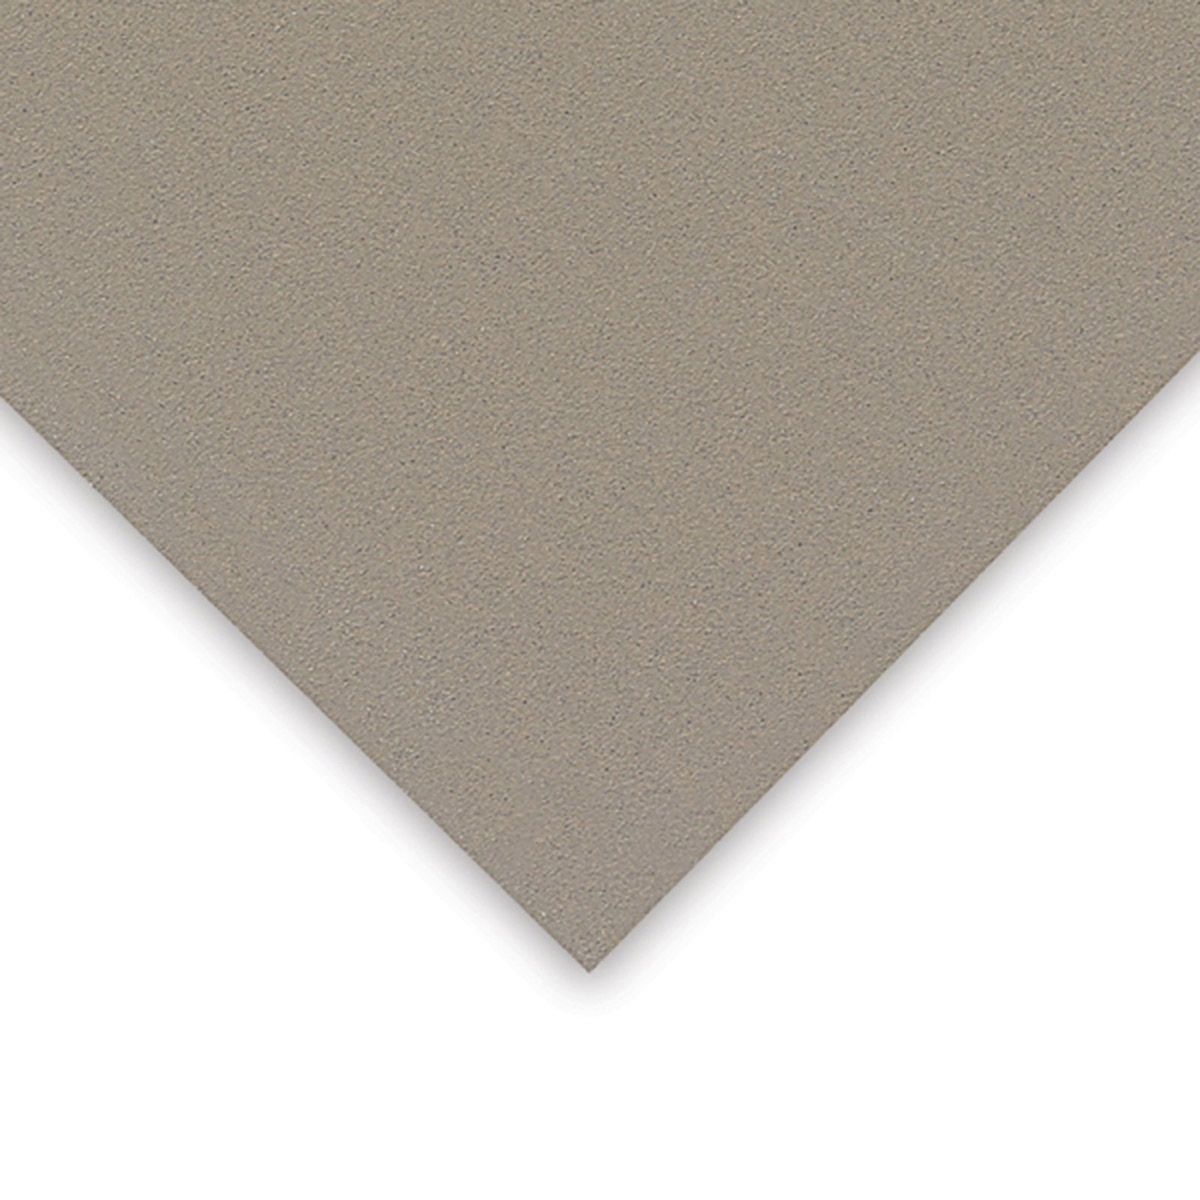 Pastel Premier Sanded Paper Med Grit, Italian Clay Sheet, 20